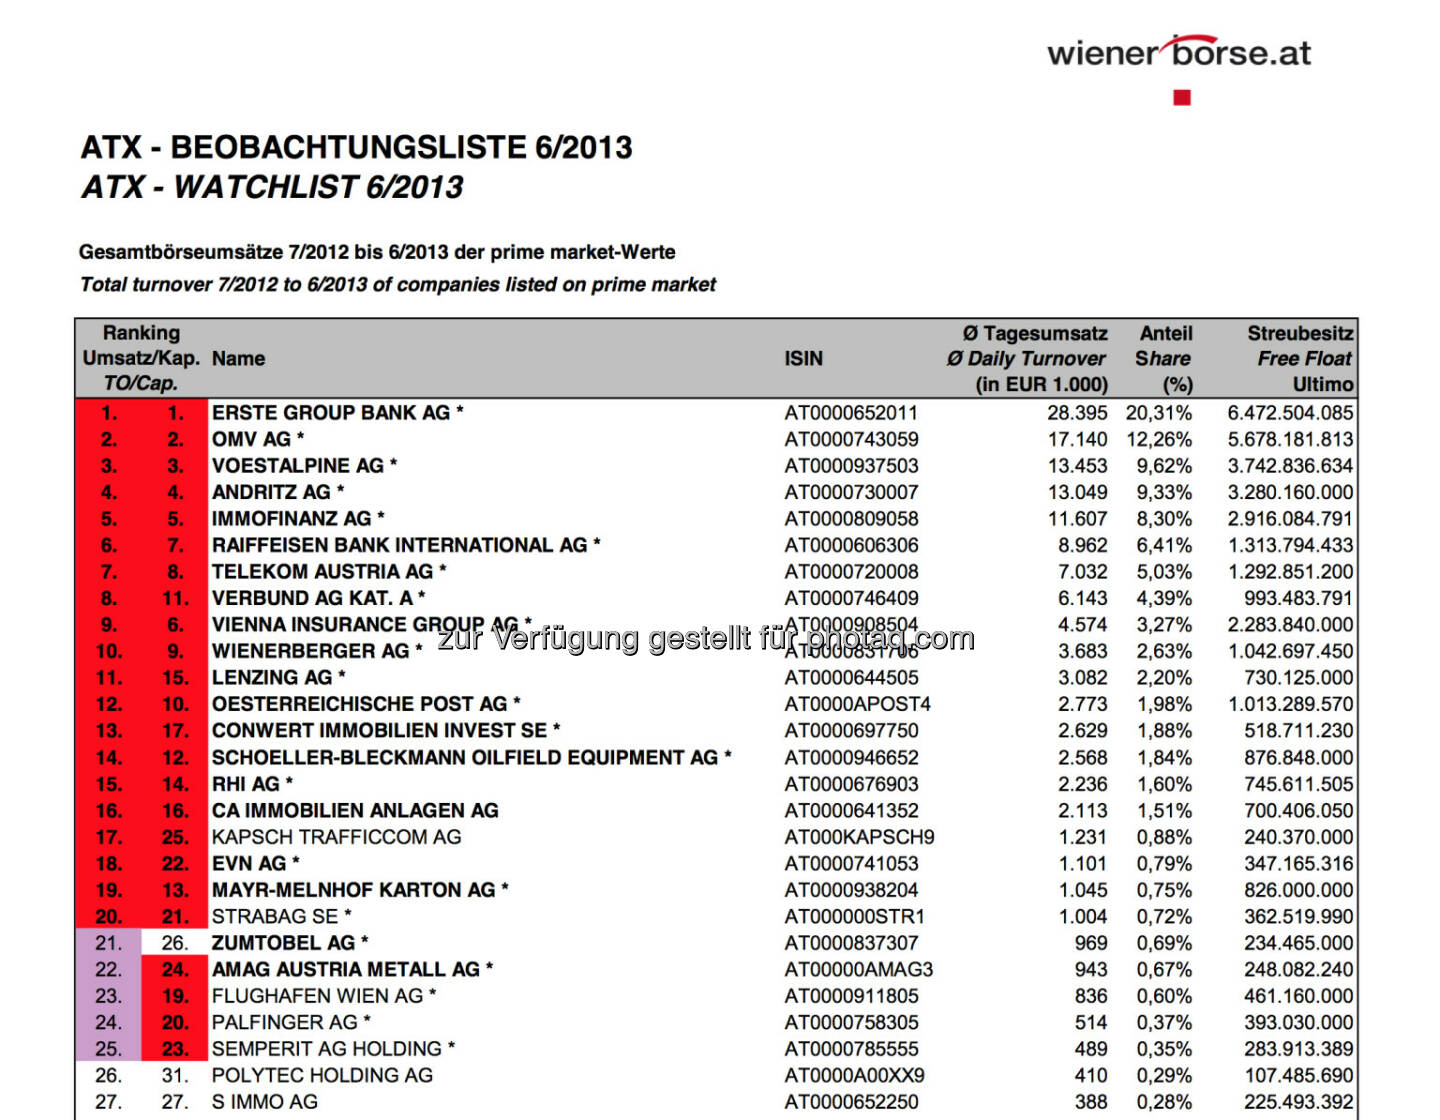 ATX-Beobachtungsliste 6/2013 (c) Wiener Börse